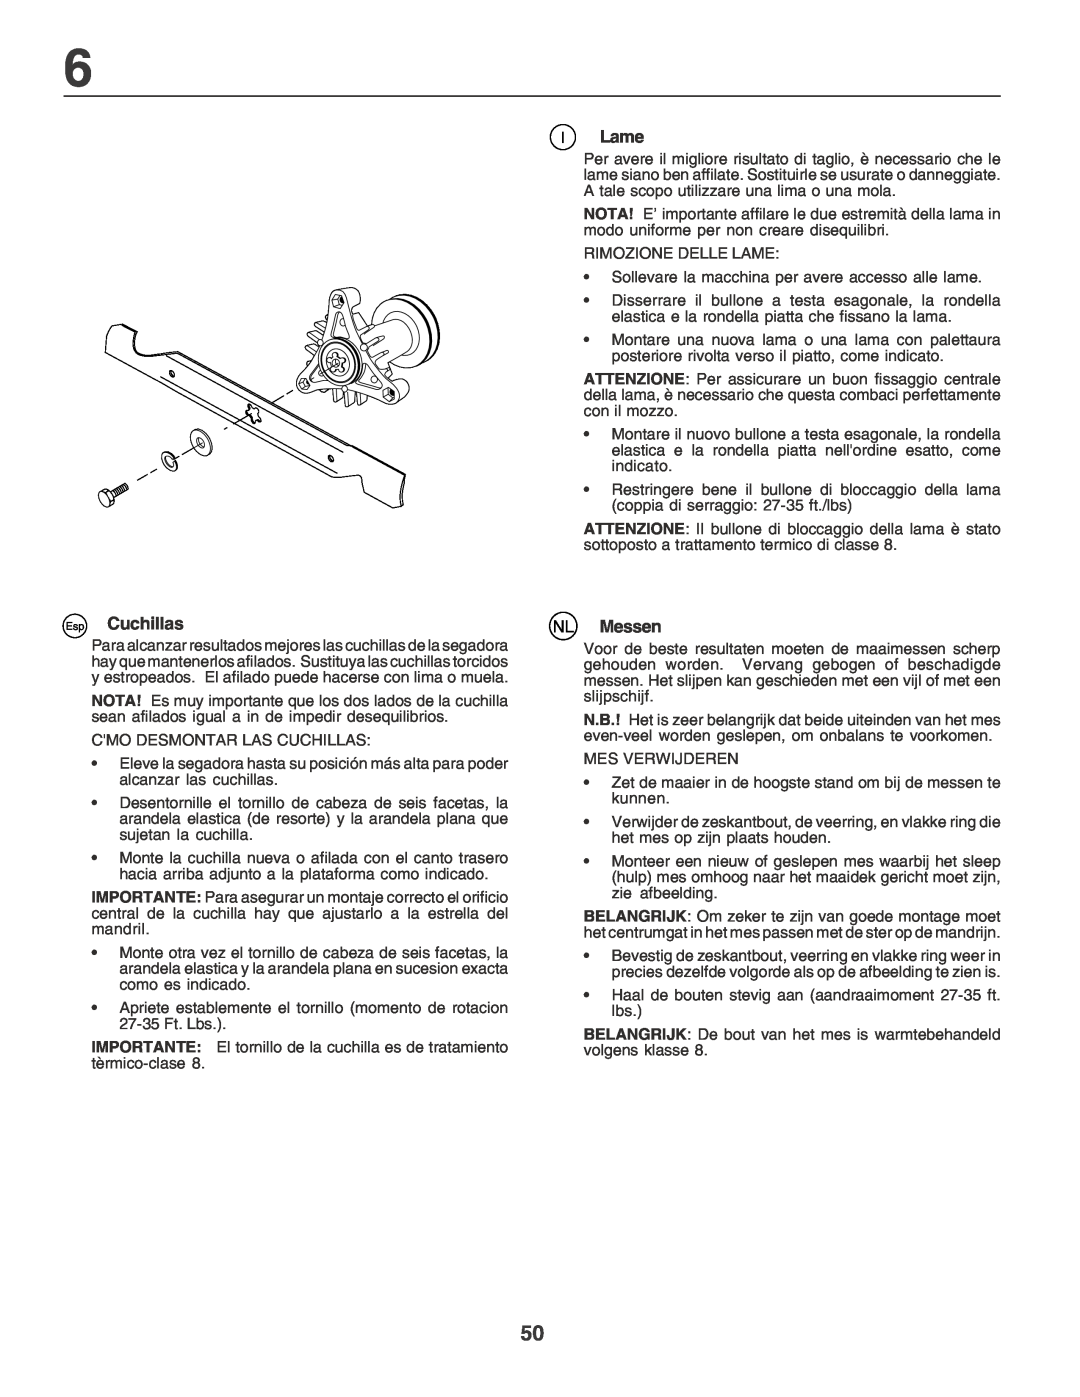 Husqvarna LT135 instruction manual Esp Cuchillas, Lame, NL Messen 